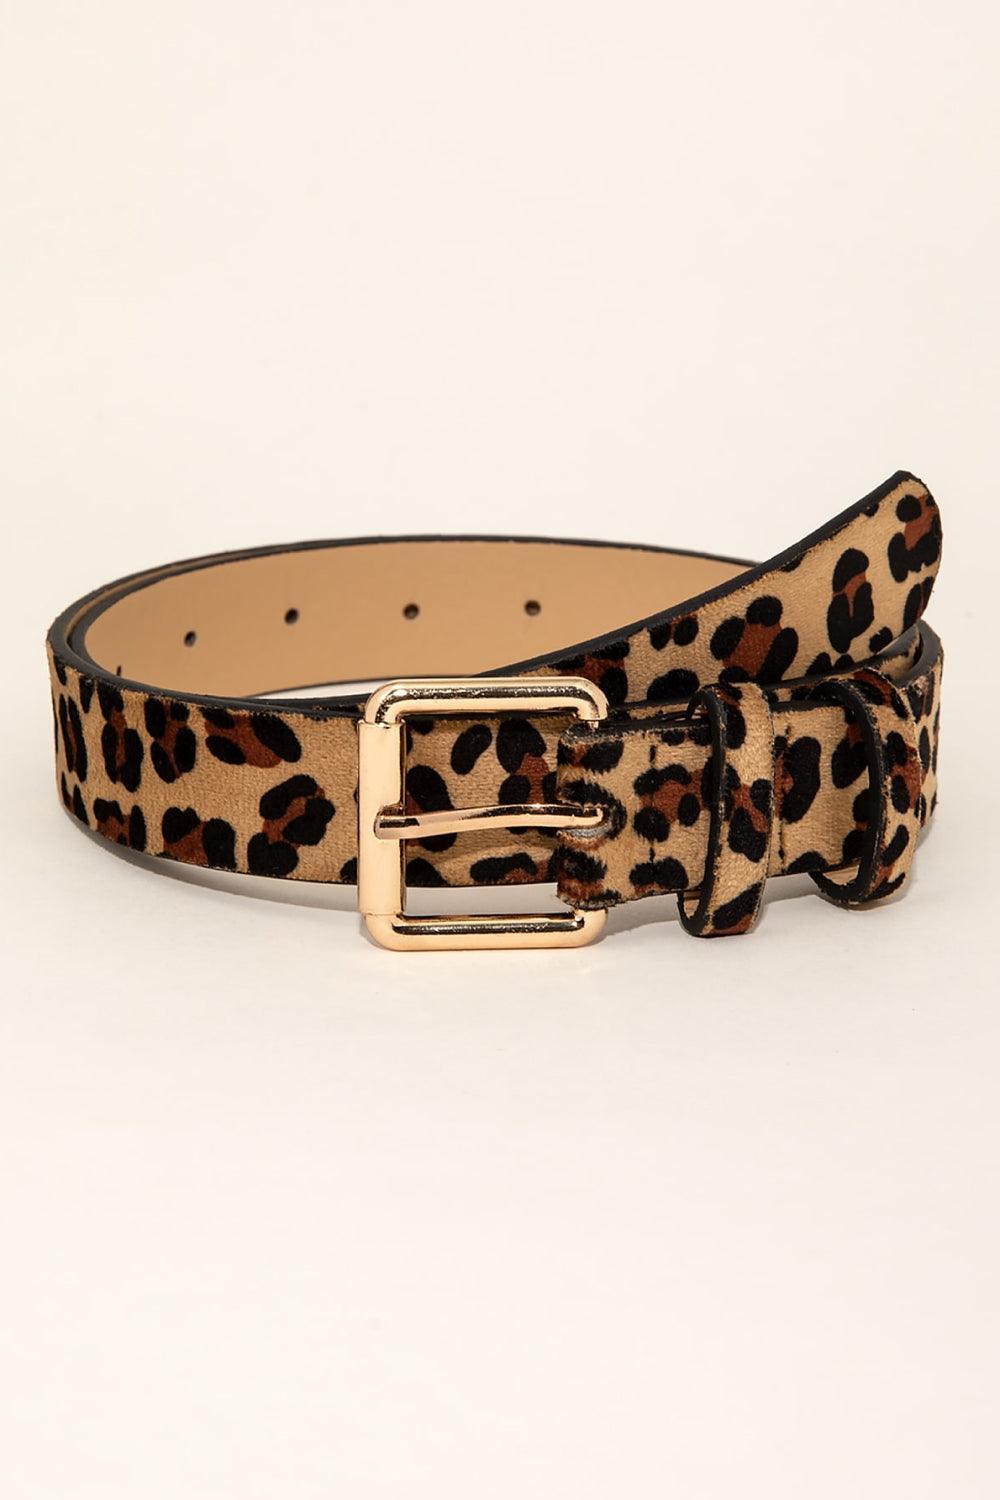 Unstoppable PU Leather Womens Leopard Belt - MXSTUDIO.COM